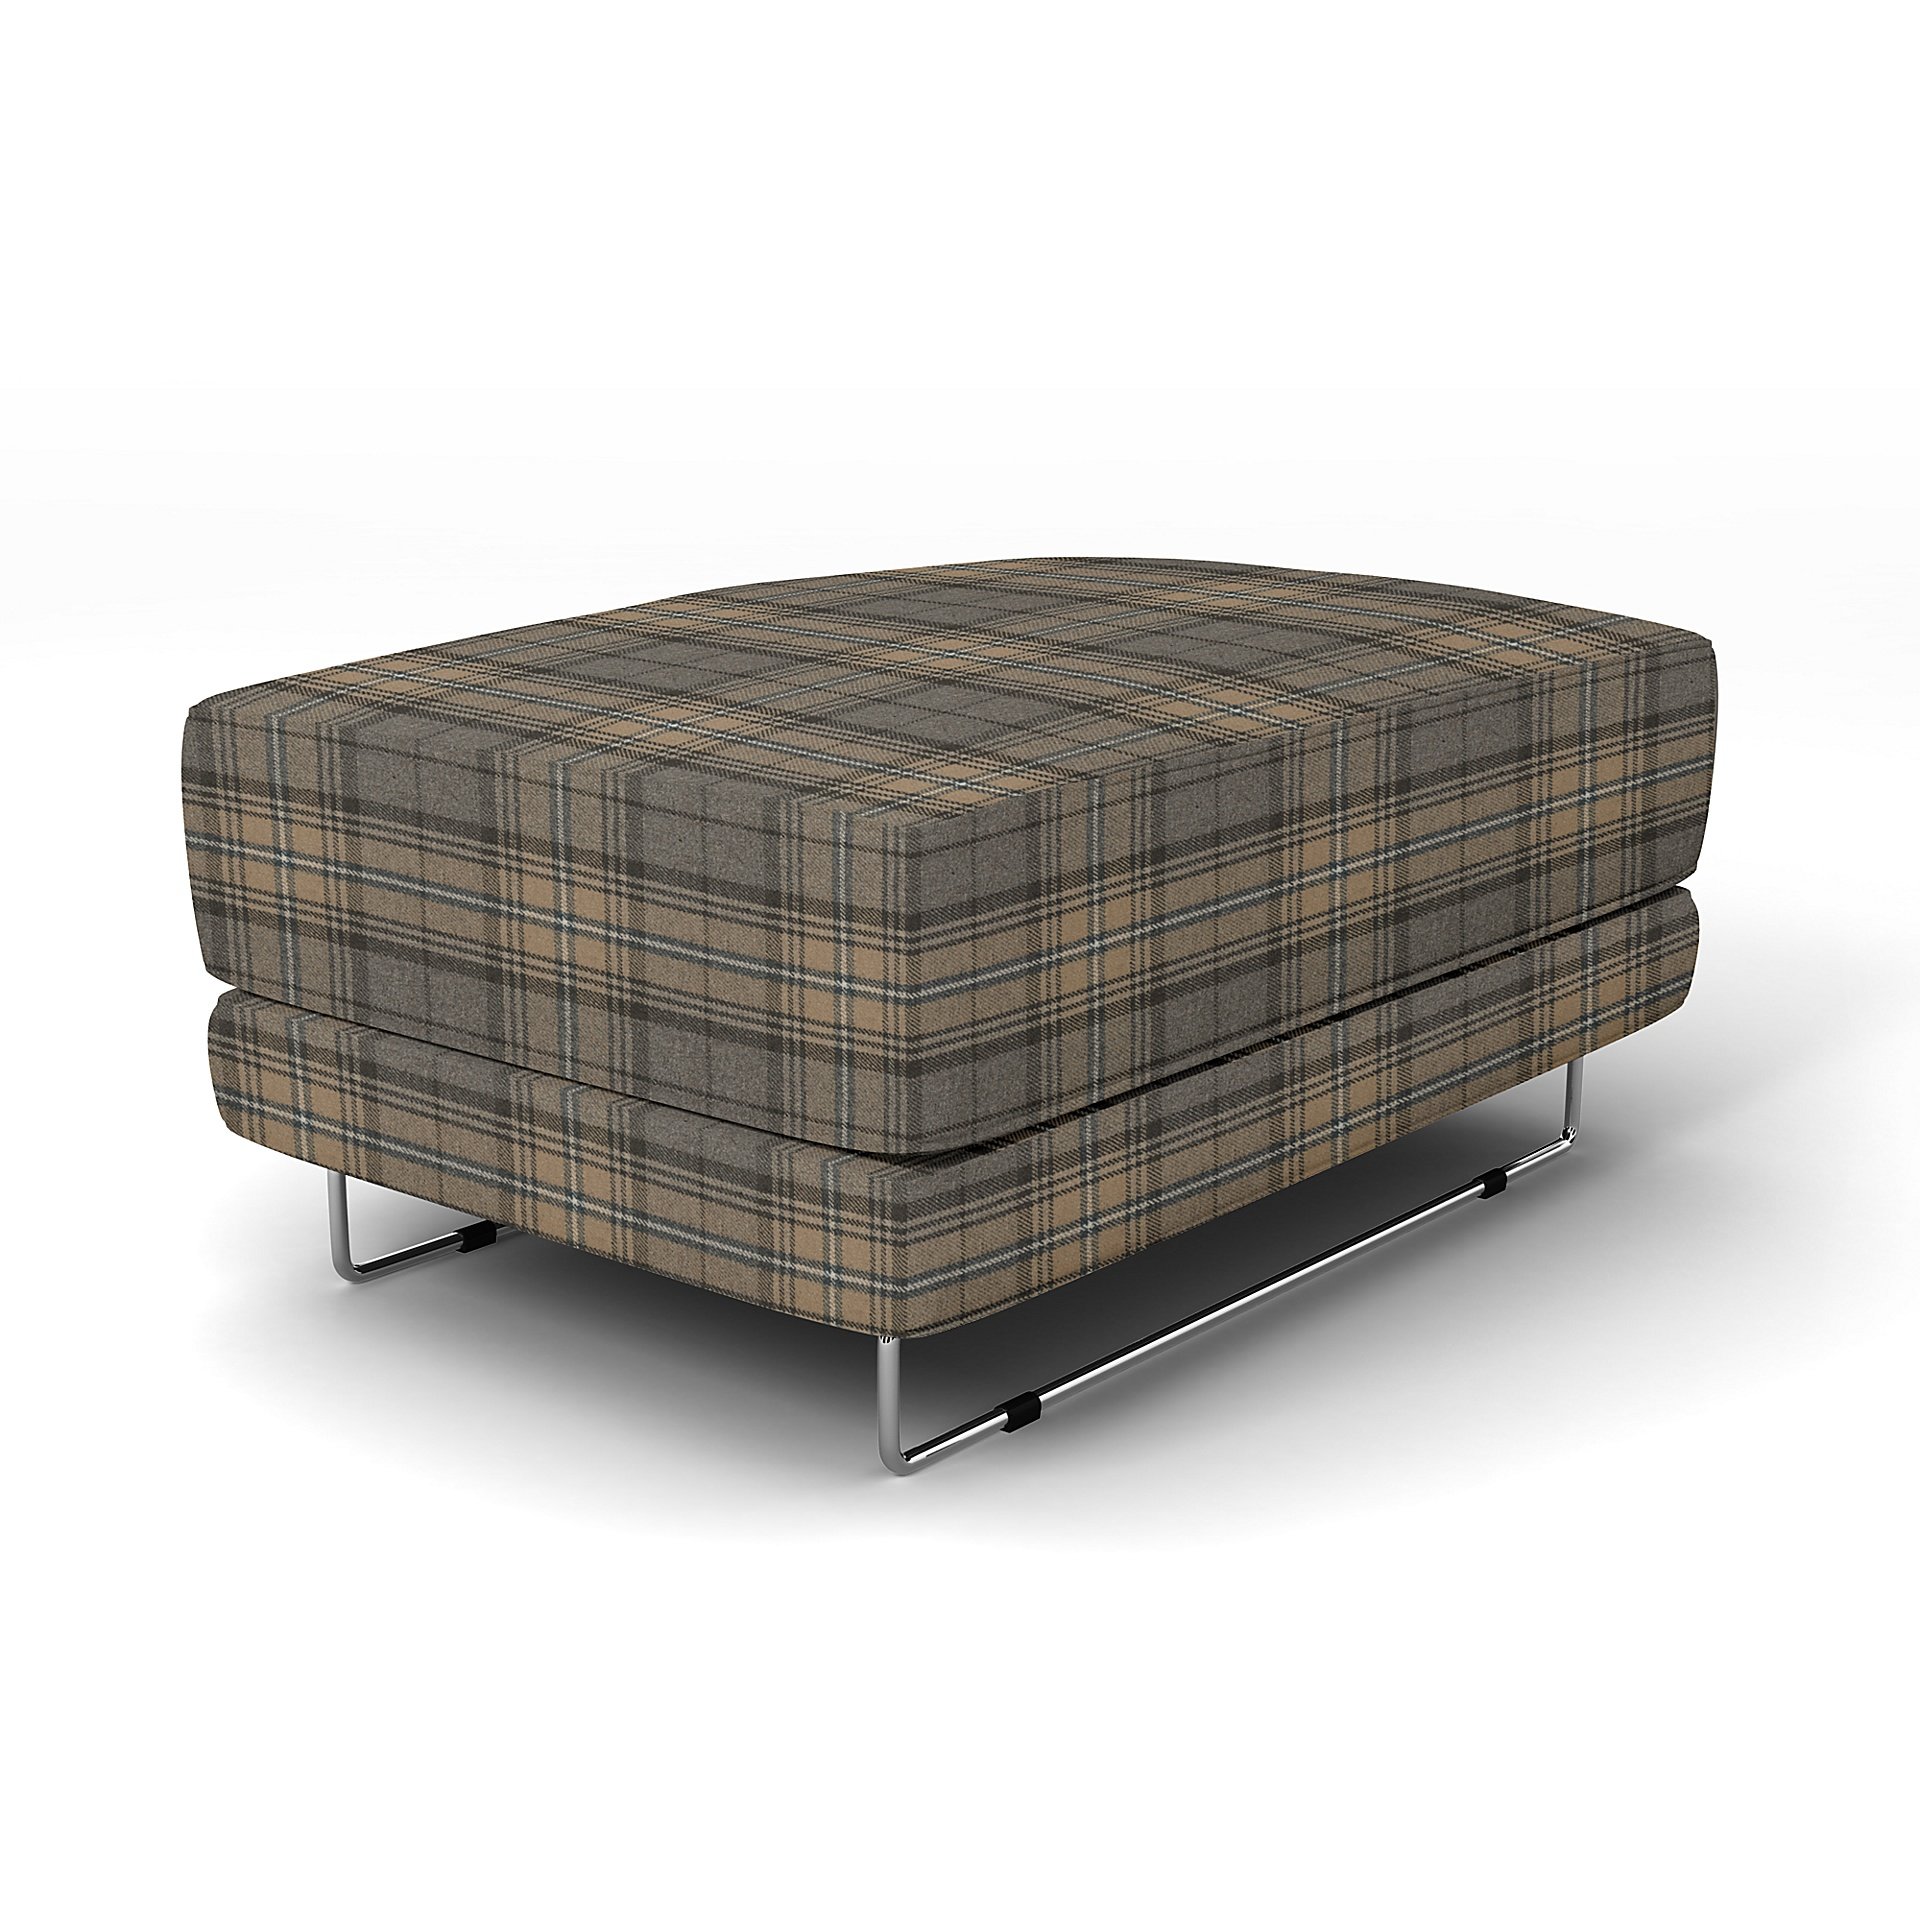 IKEA - Tylosand Footstool Cover, Bark Brown, Wool - Bemz